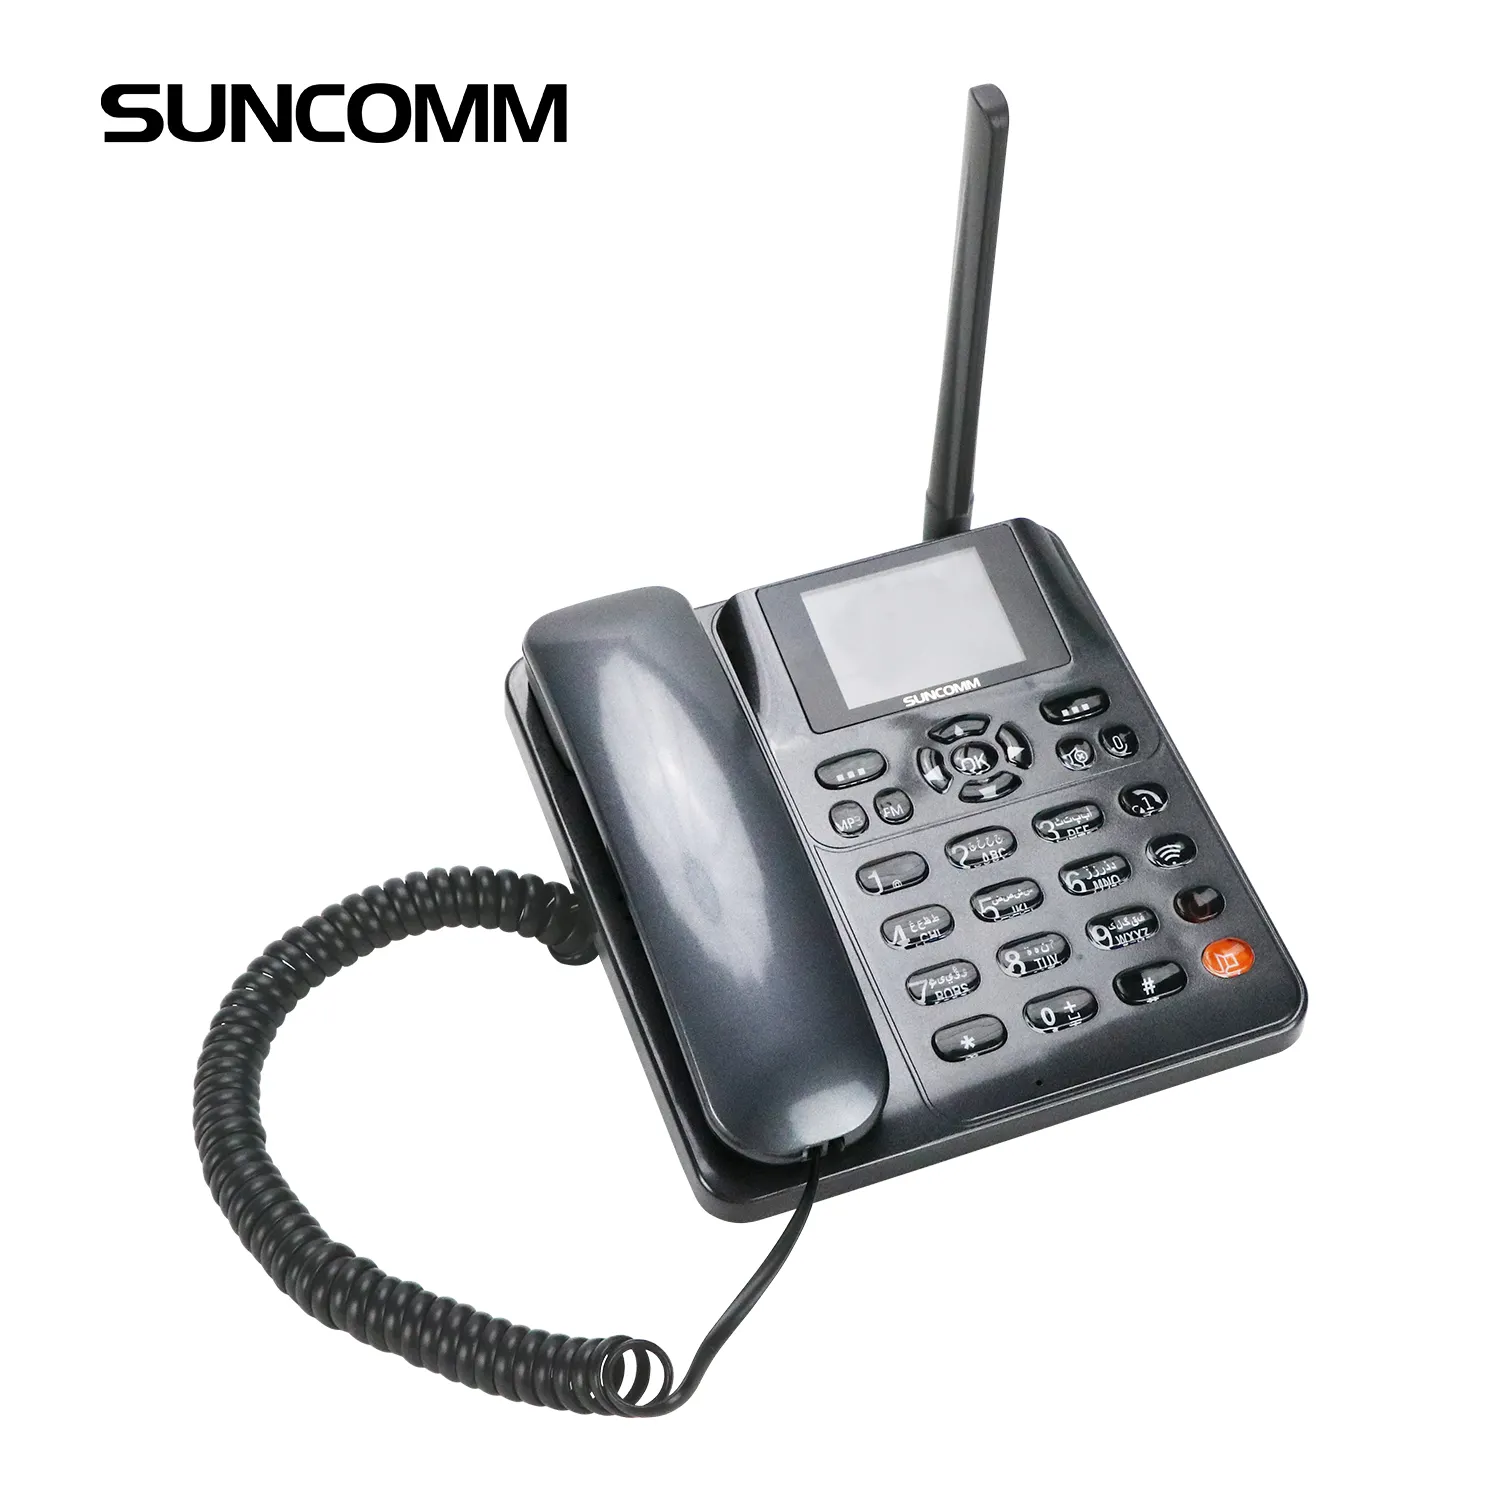 FWP 4G VOLTE Telephone mit SIM Card SUNCOMM LTE 818 WIFI Record Home Cordless Landline Phone